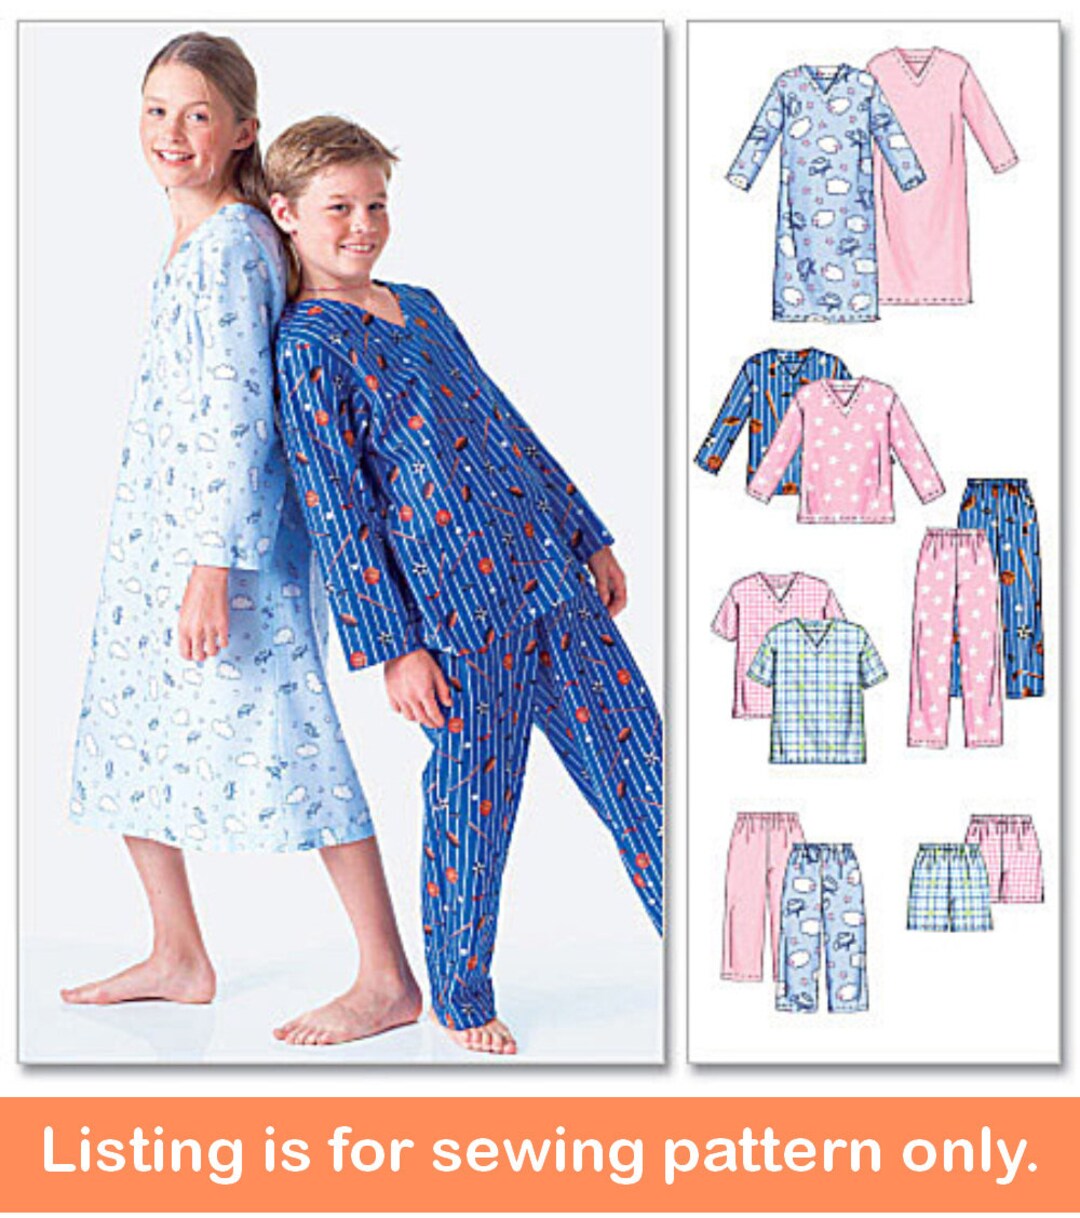 Sale PAJAMAS SEWING PATTERN Sew Girls Clothes Clothing Nightgown Bathrobe  Robe Sleepwear Nightwear Size 2 3 4 5 for Children 7679 -  Canada